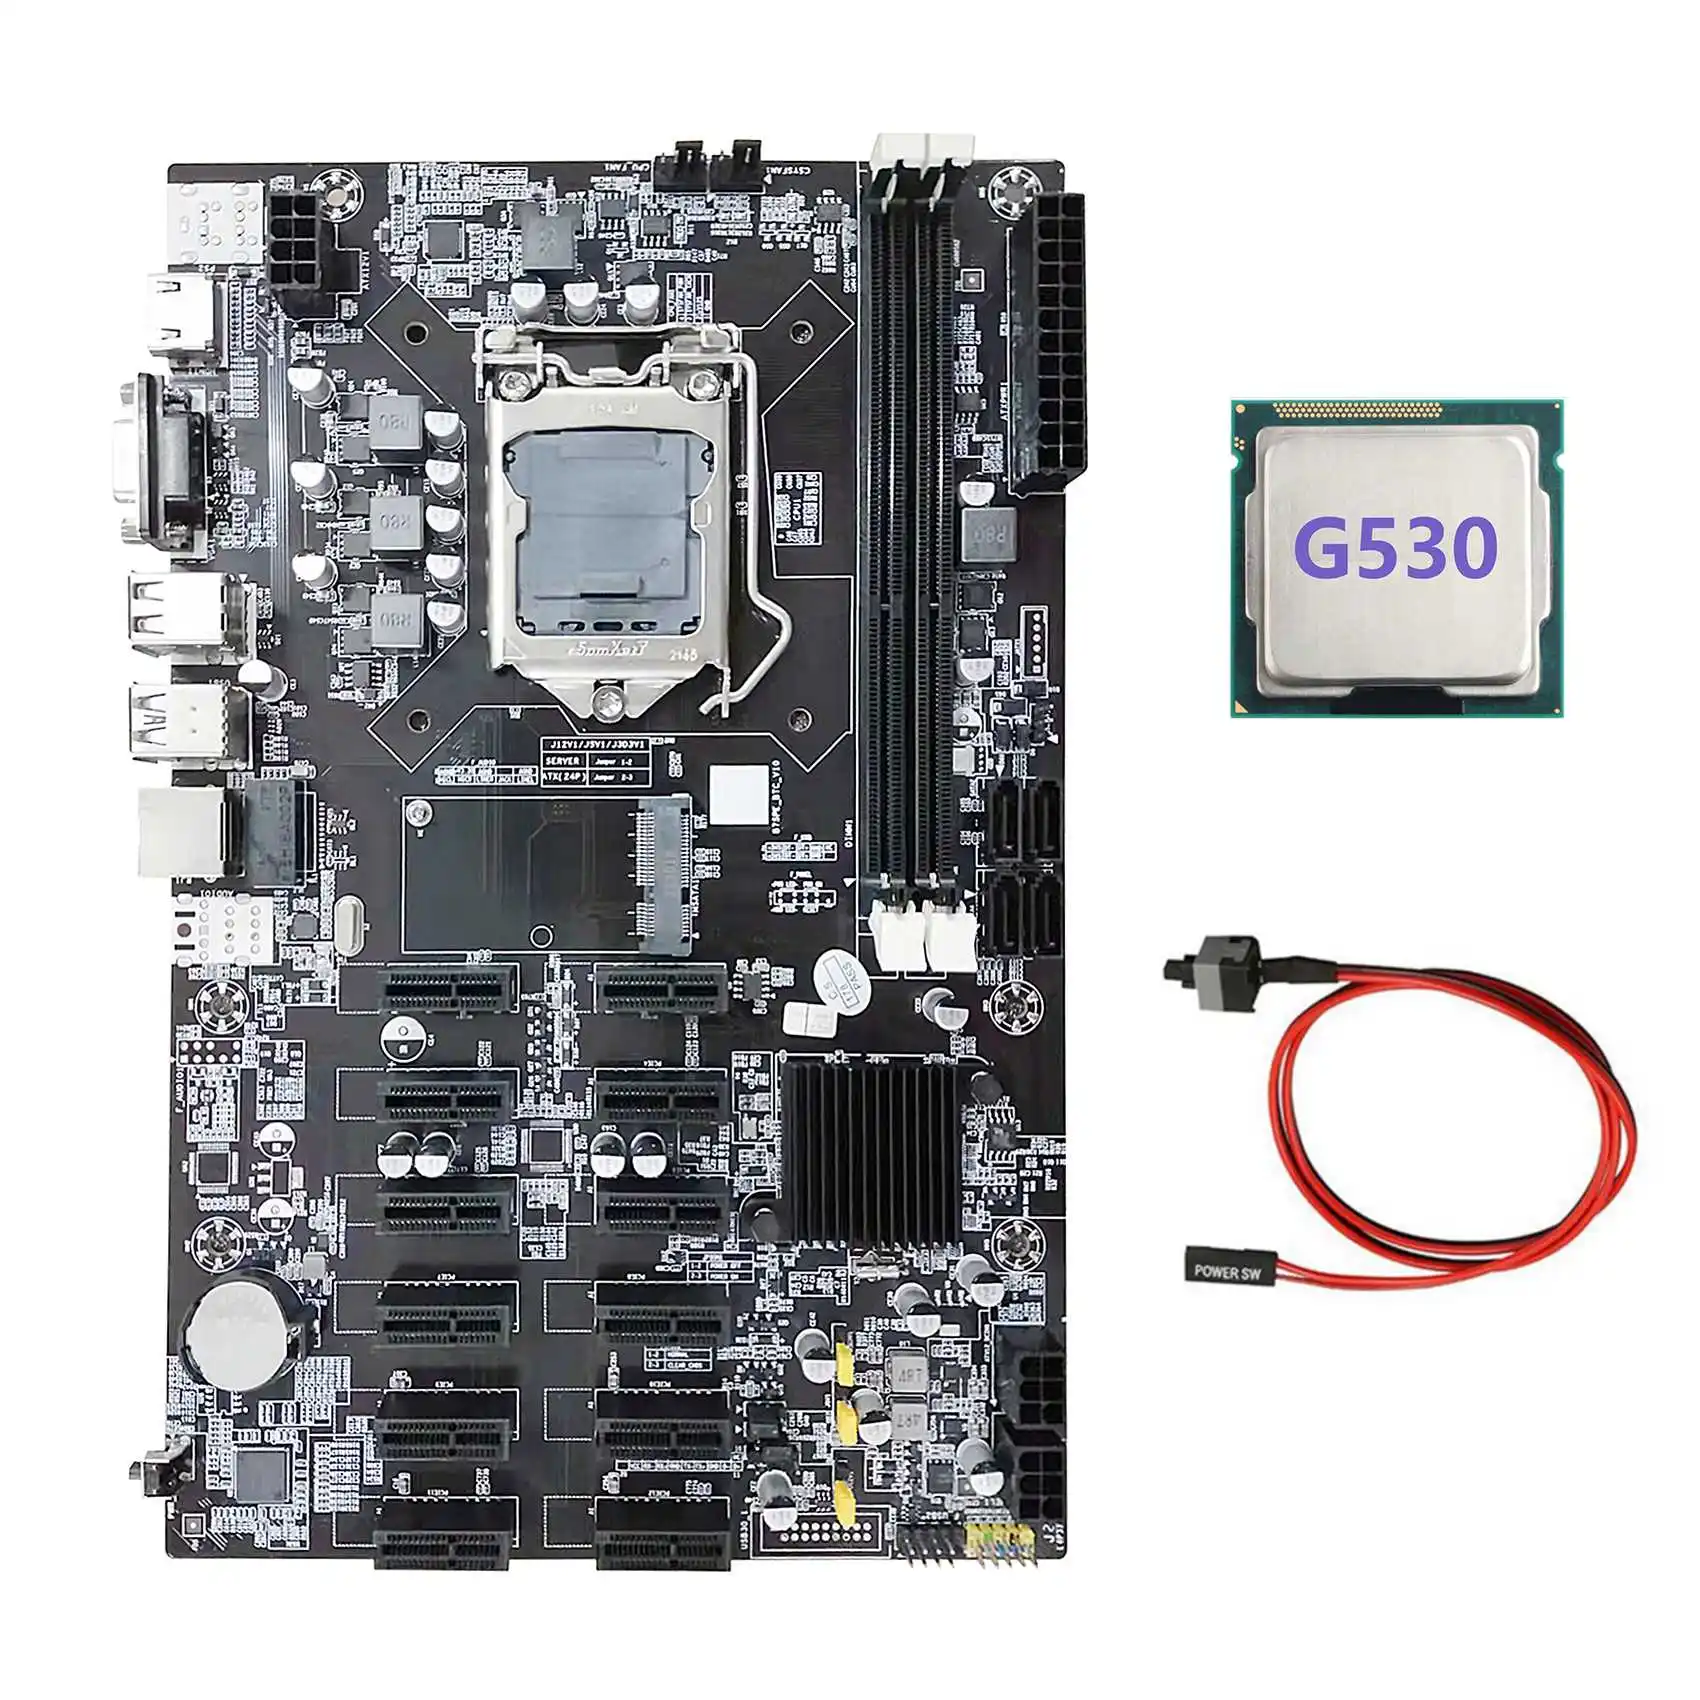 B75 12 PCIE ETH Mining Motherboard+G530 CPU+Switch Cable LGA1155 MSATA USB3.0 SATA3.0 DDR3 B75 BTC Miner Motherboard